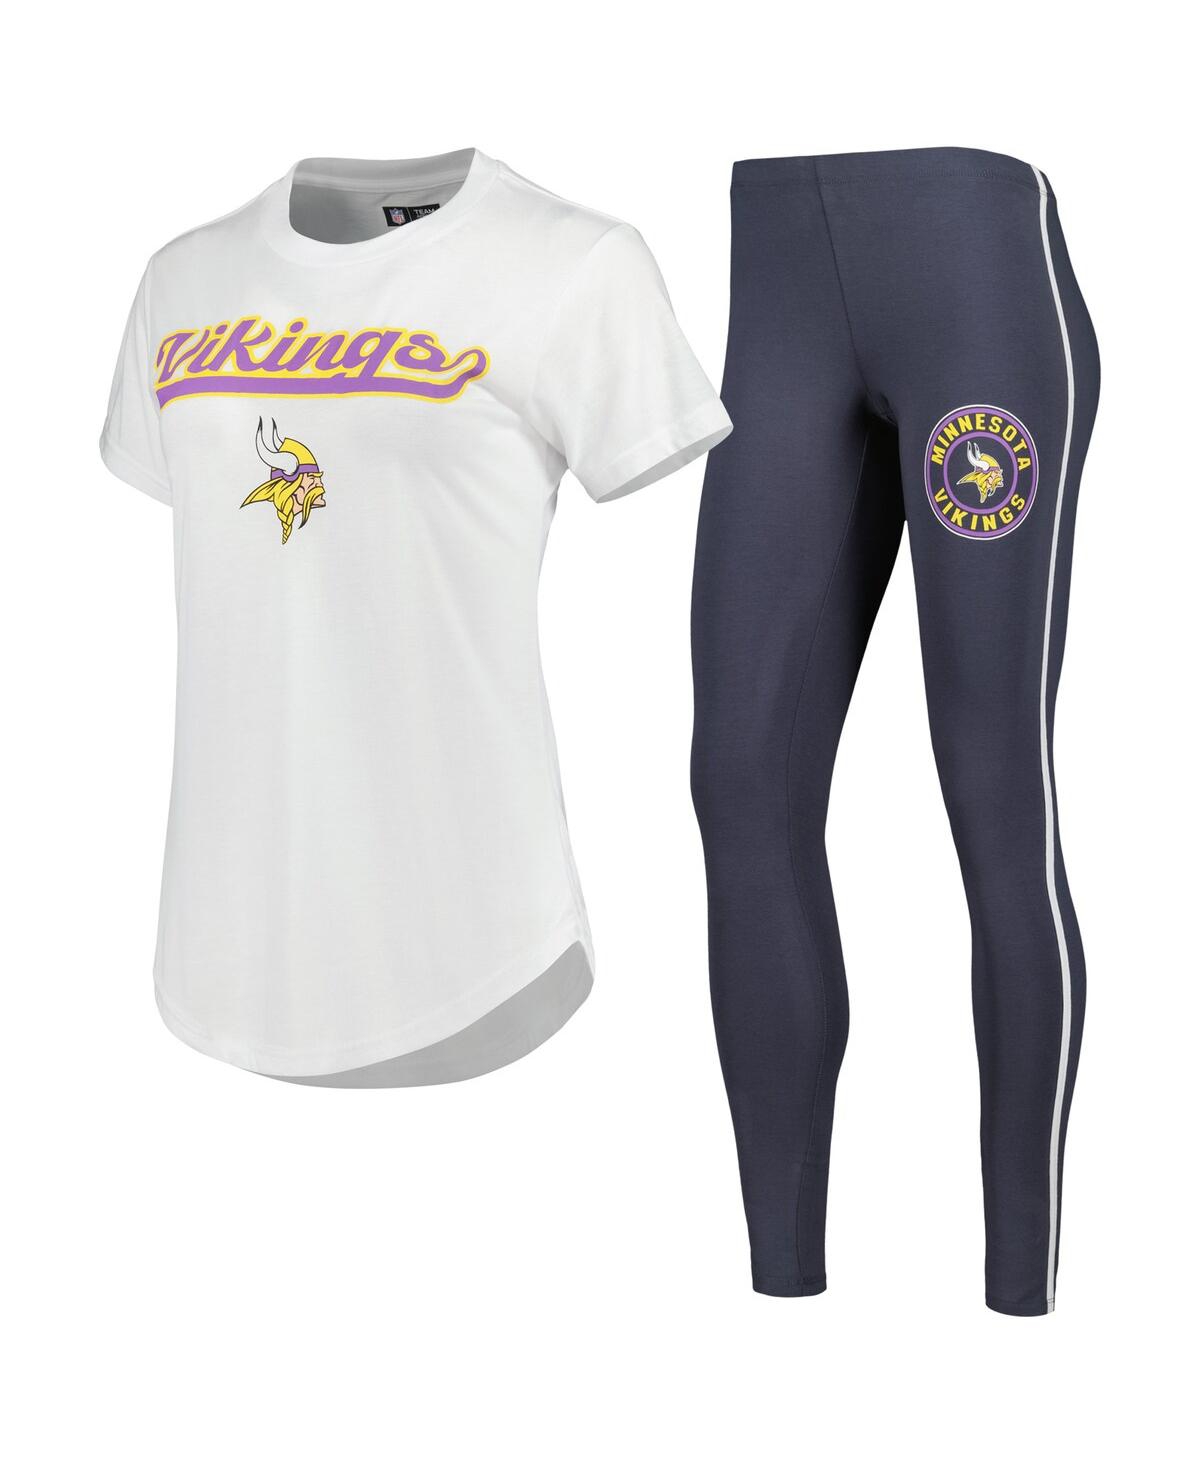 Women's Concepts Sport White, Charcoal Minnesota Vikings Sonata T-shirt and Leggings Sleep Set - White, Charcoal